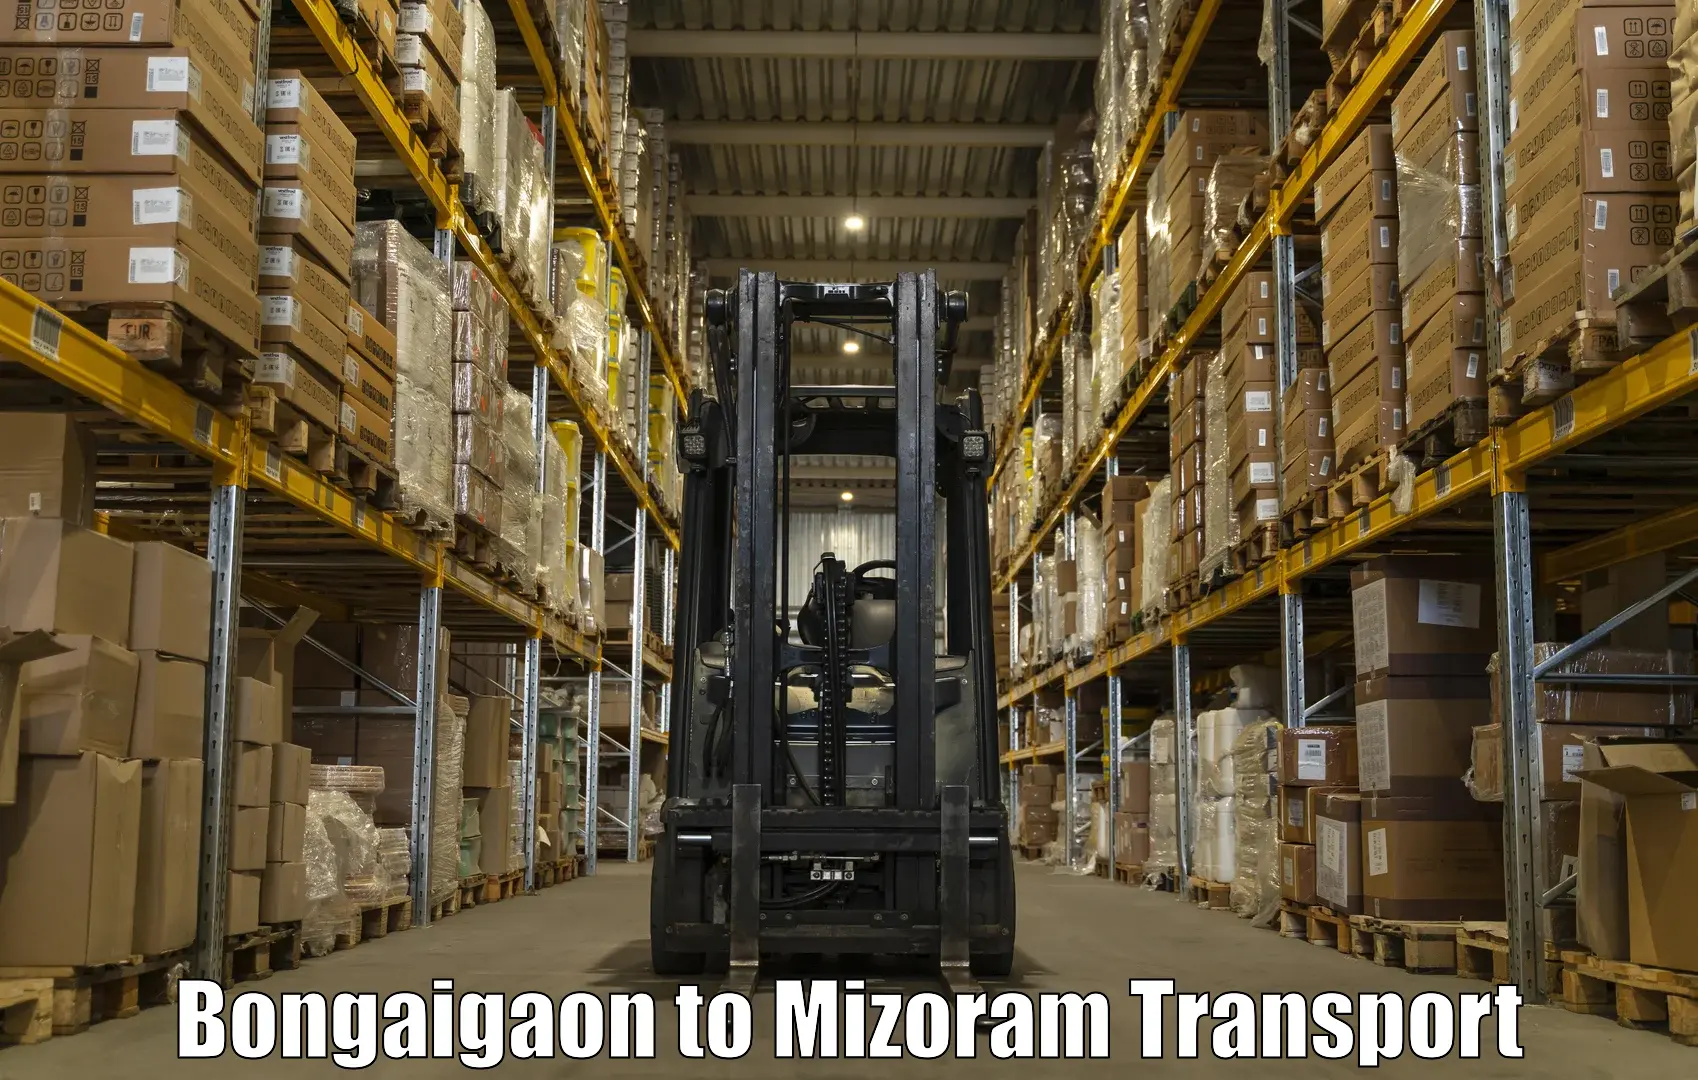 Sending bike to another city Bongaigaon to Mizoram